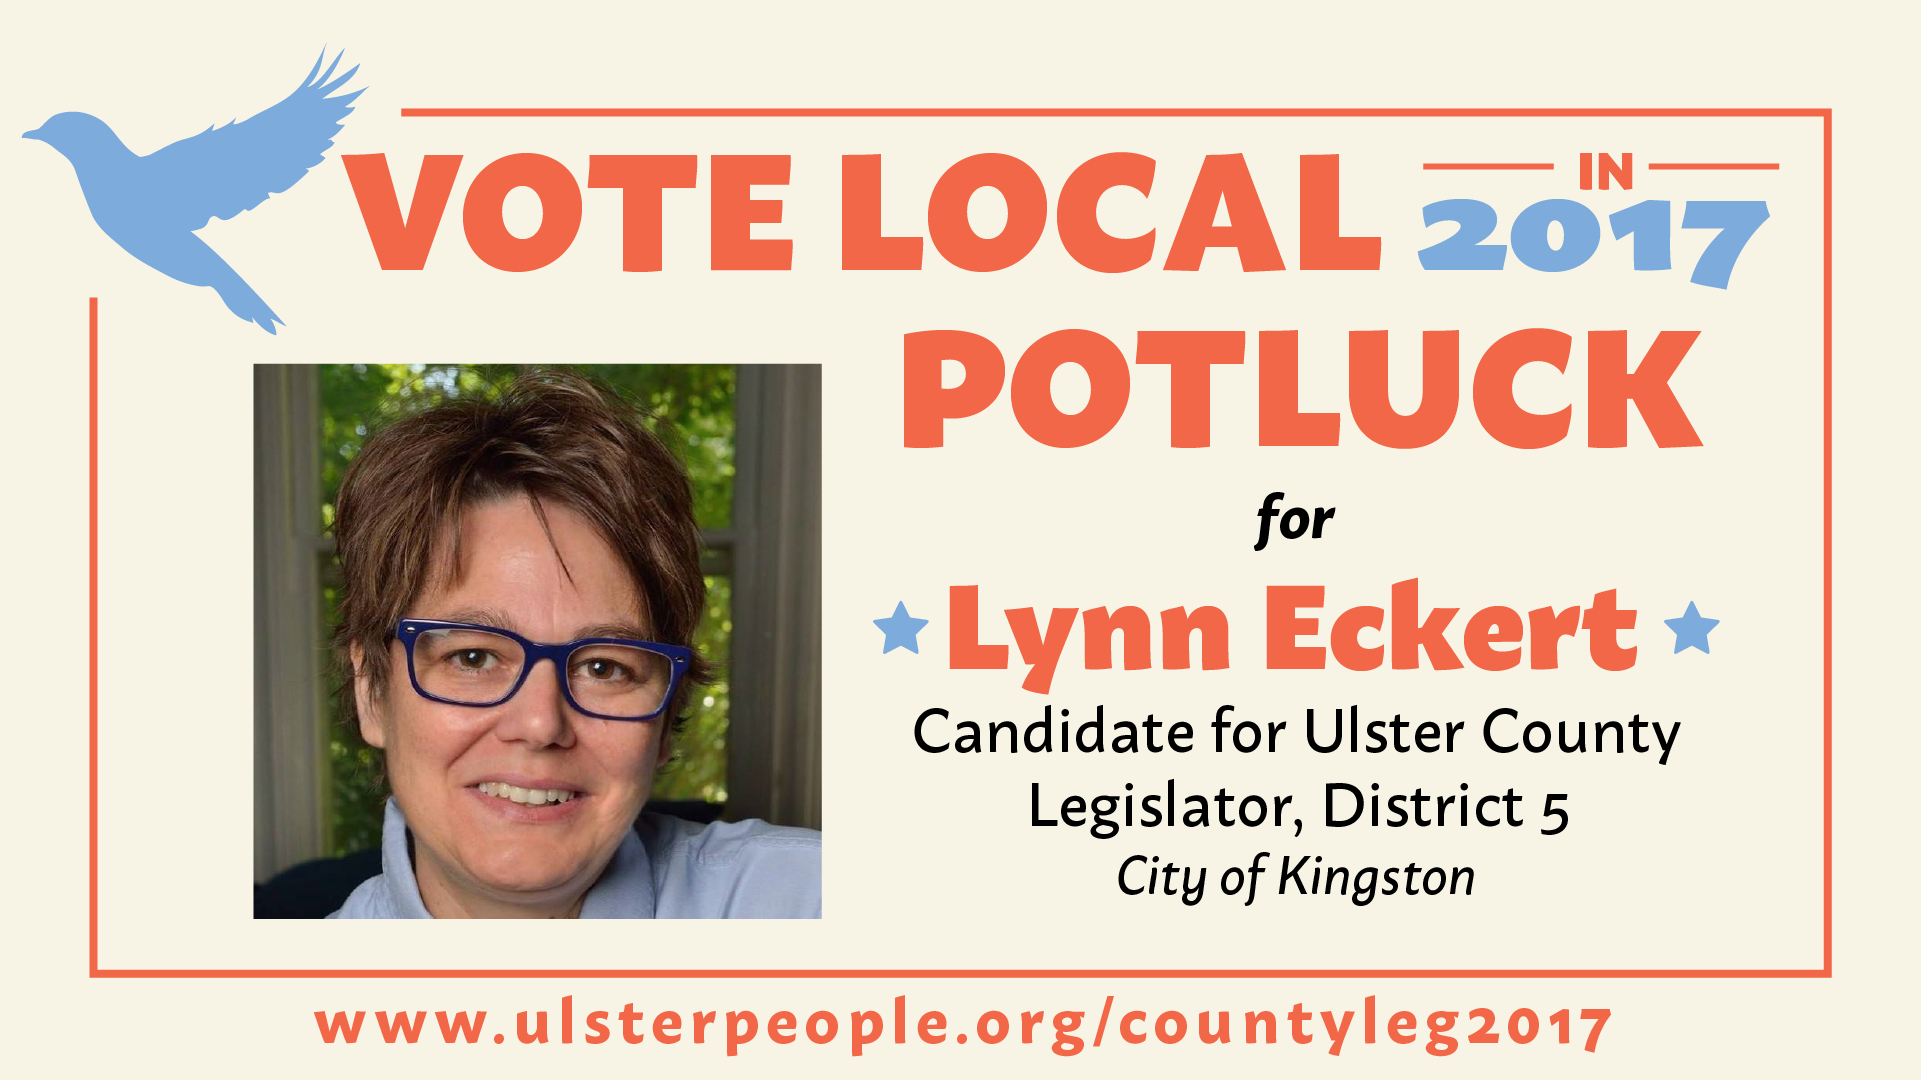 Vote Local Potluck for Lynn Eckert